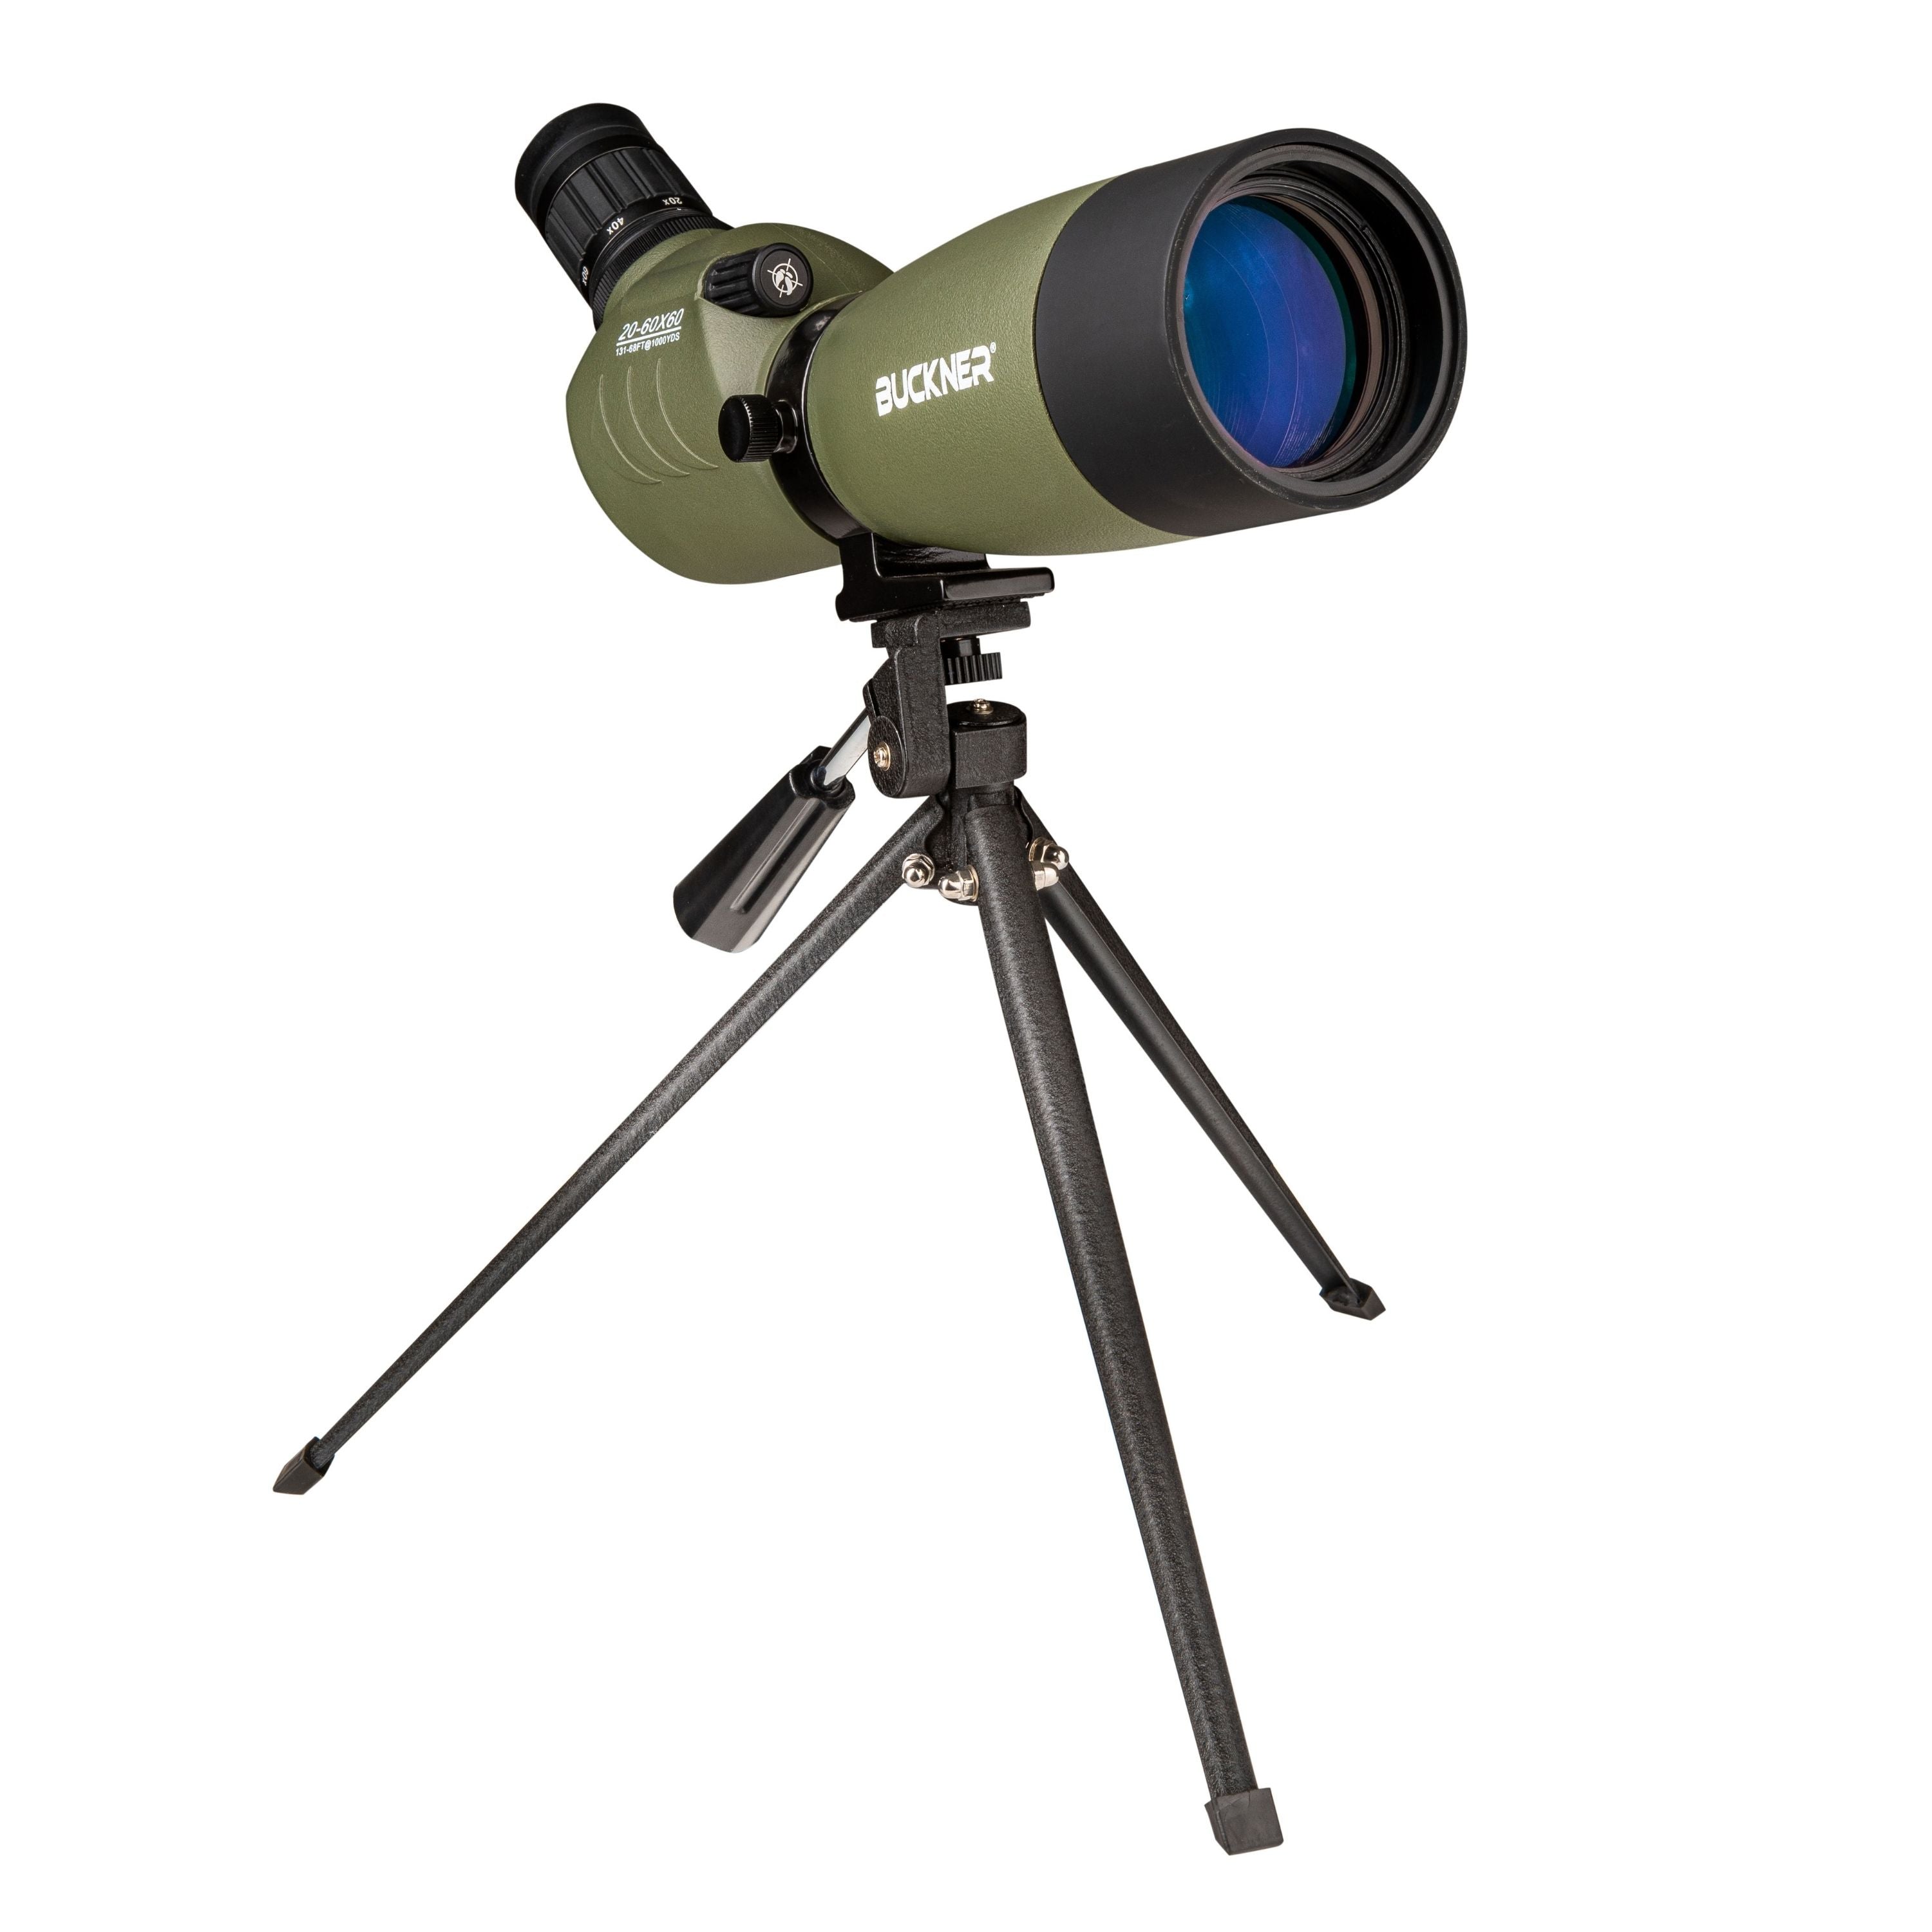 Spotting scope 20-60x60 mm